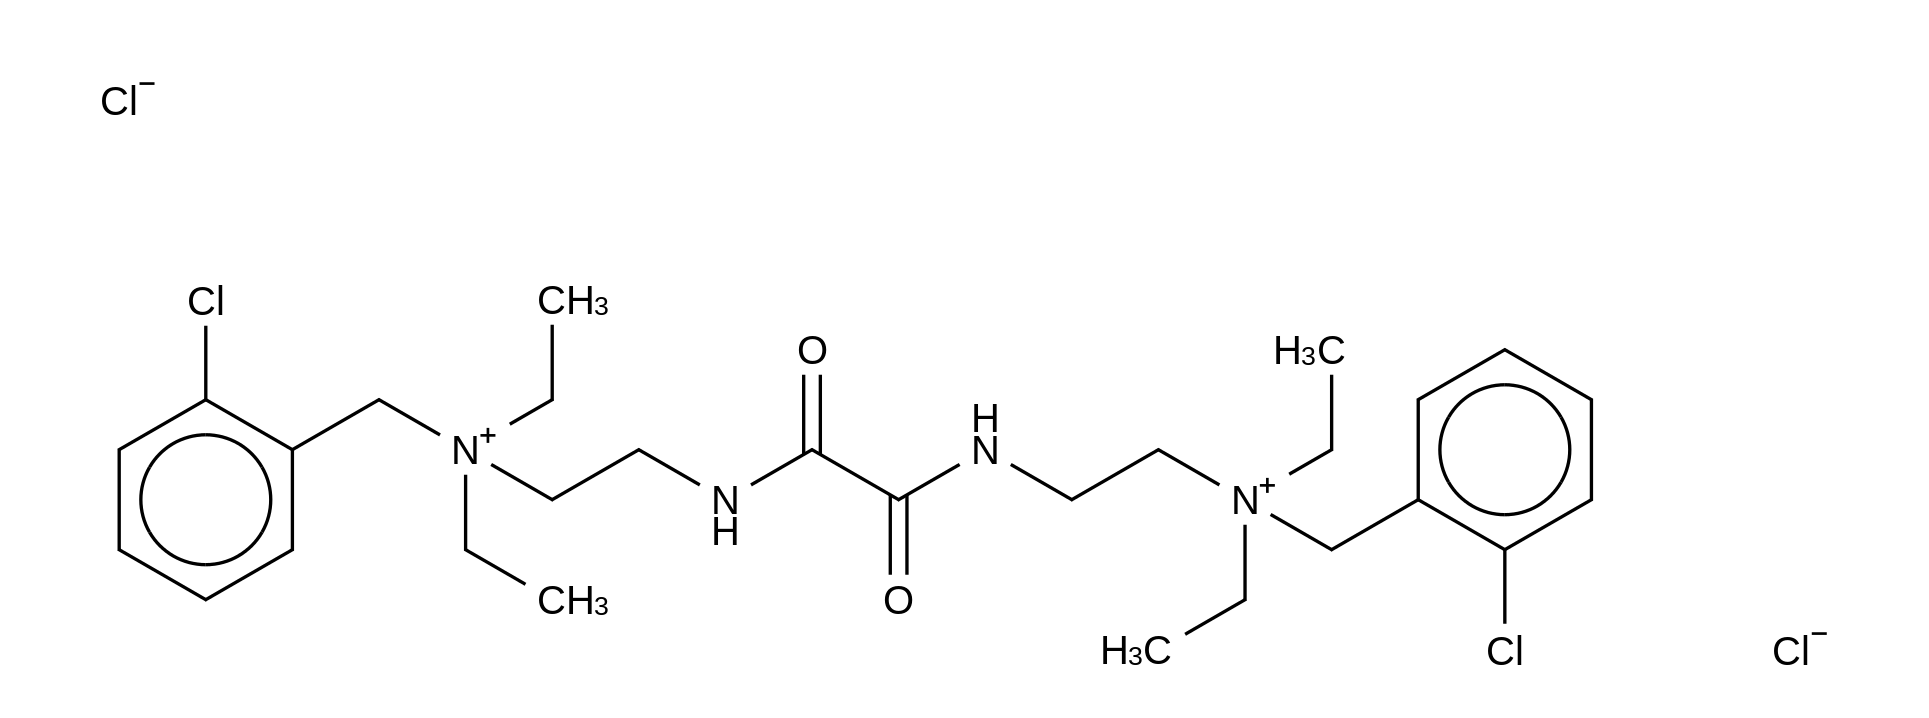 Ambenonium Dichloride